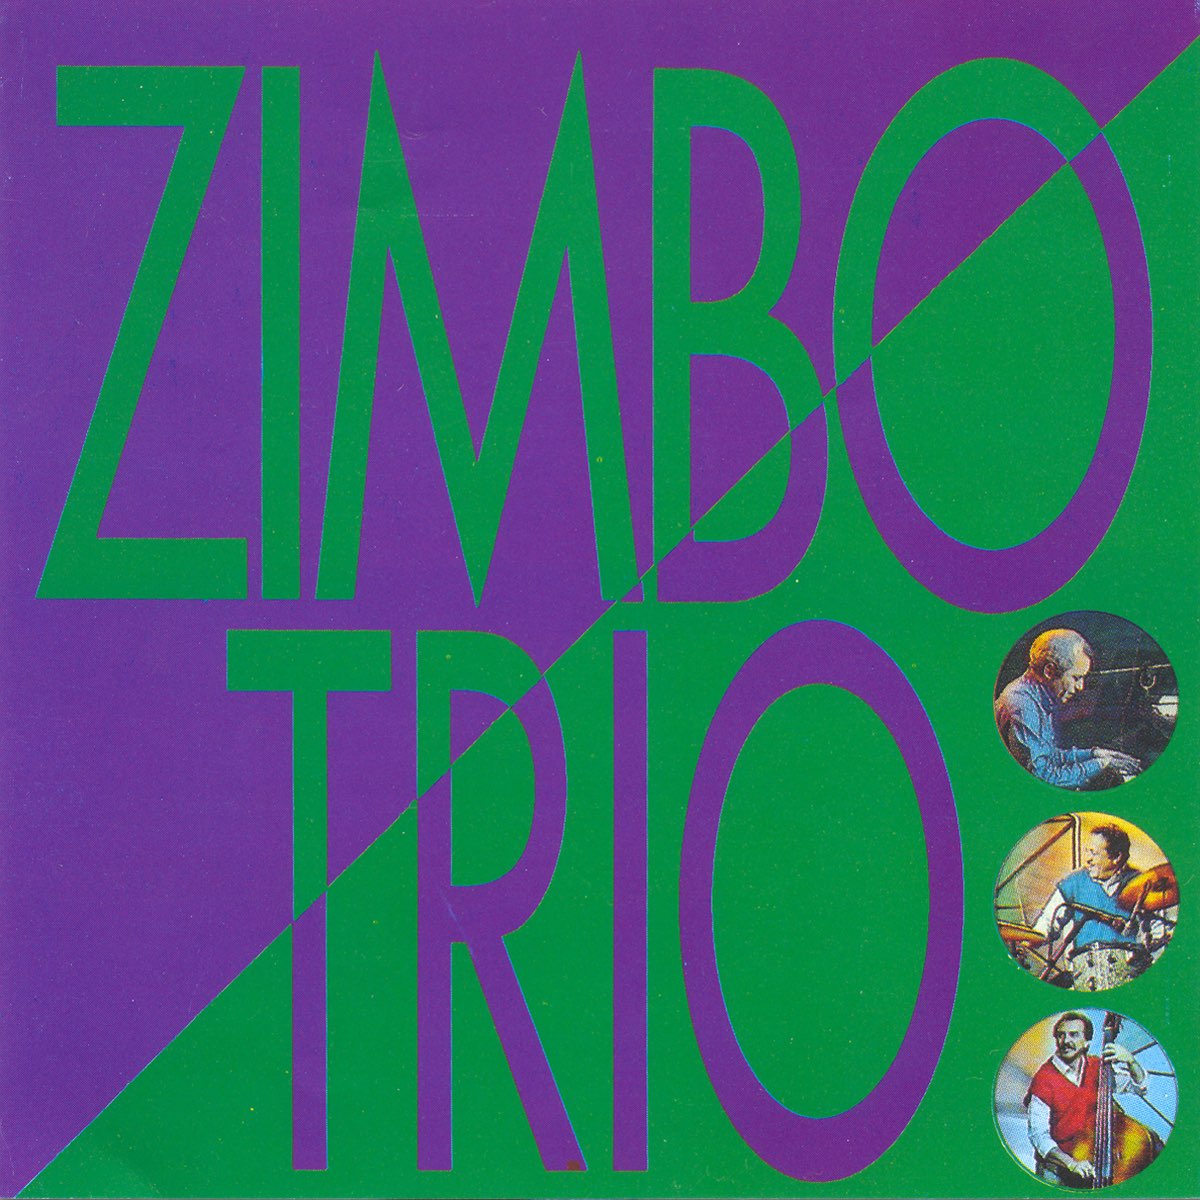 Zimbo trio - 洋楽